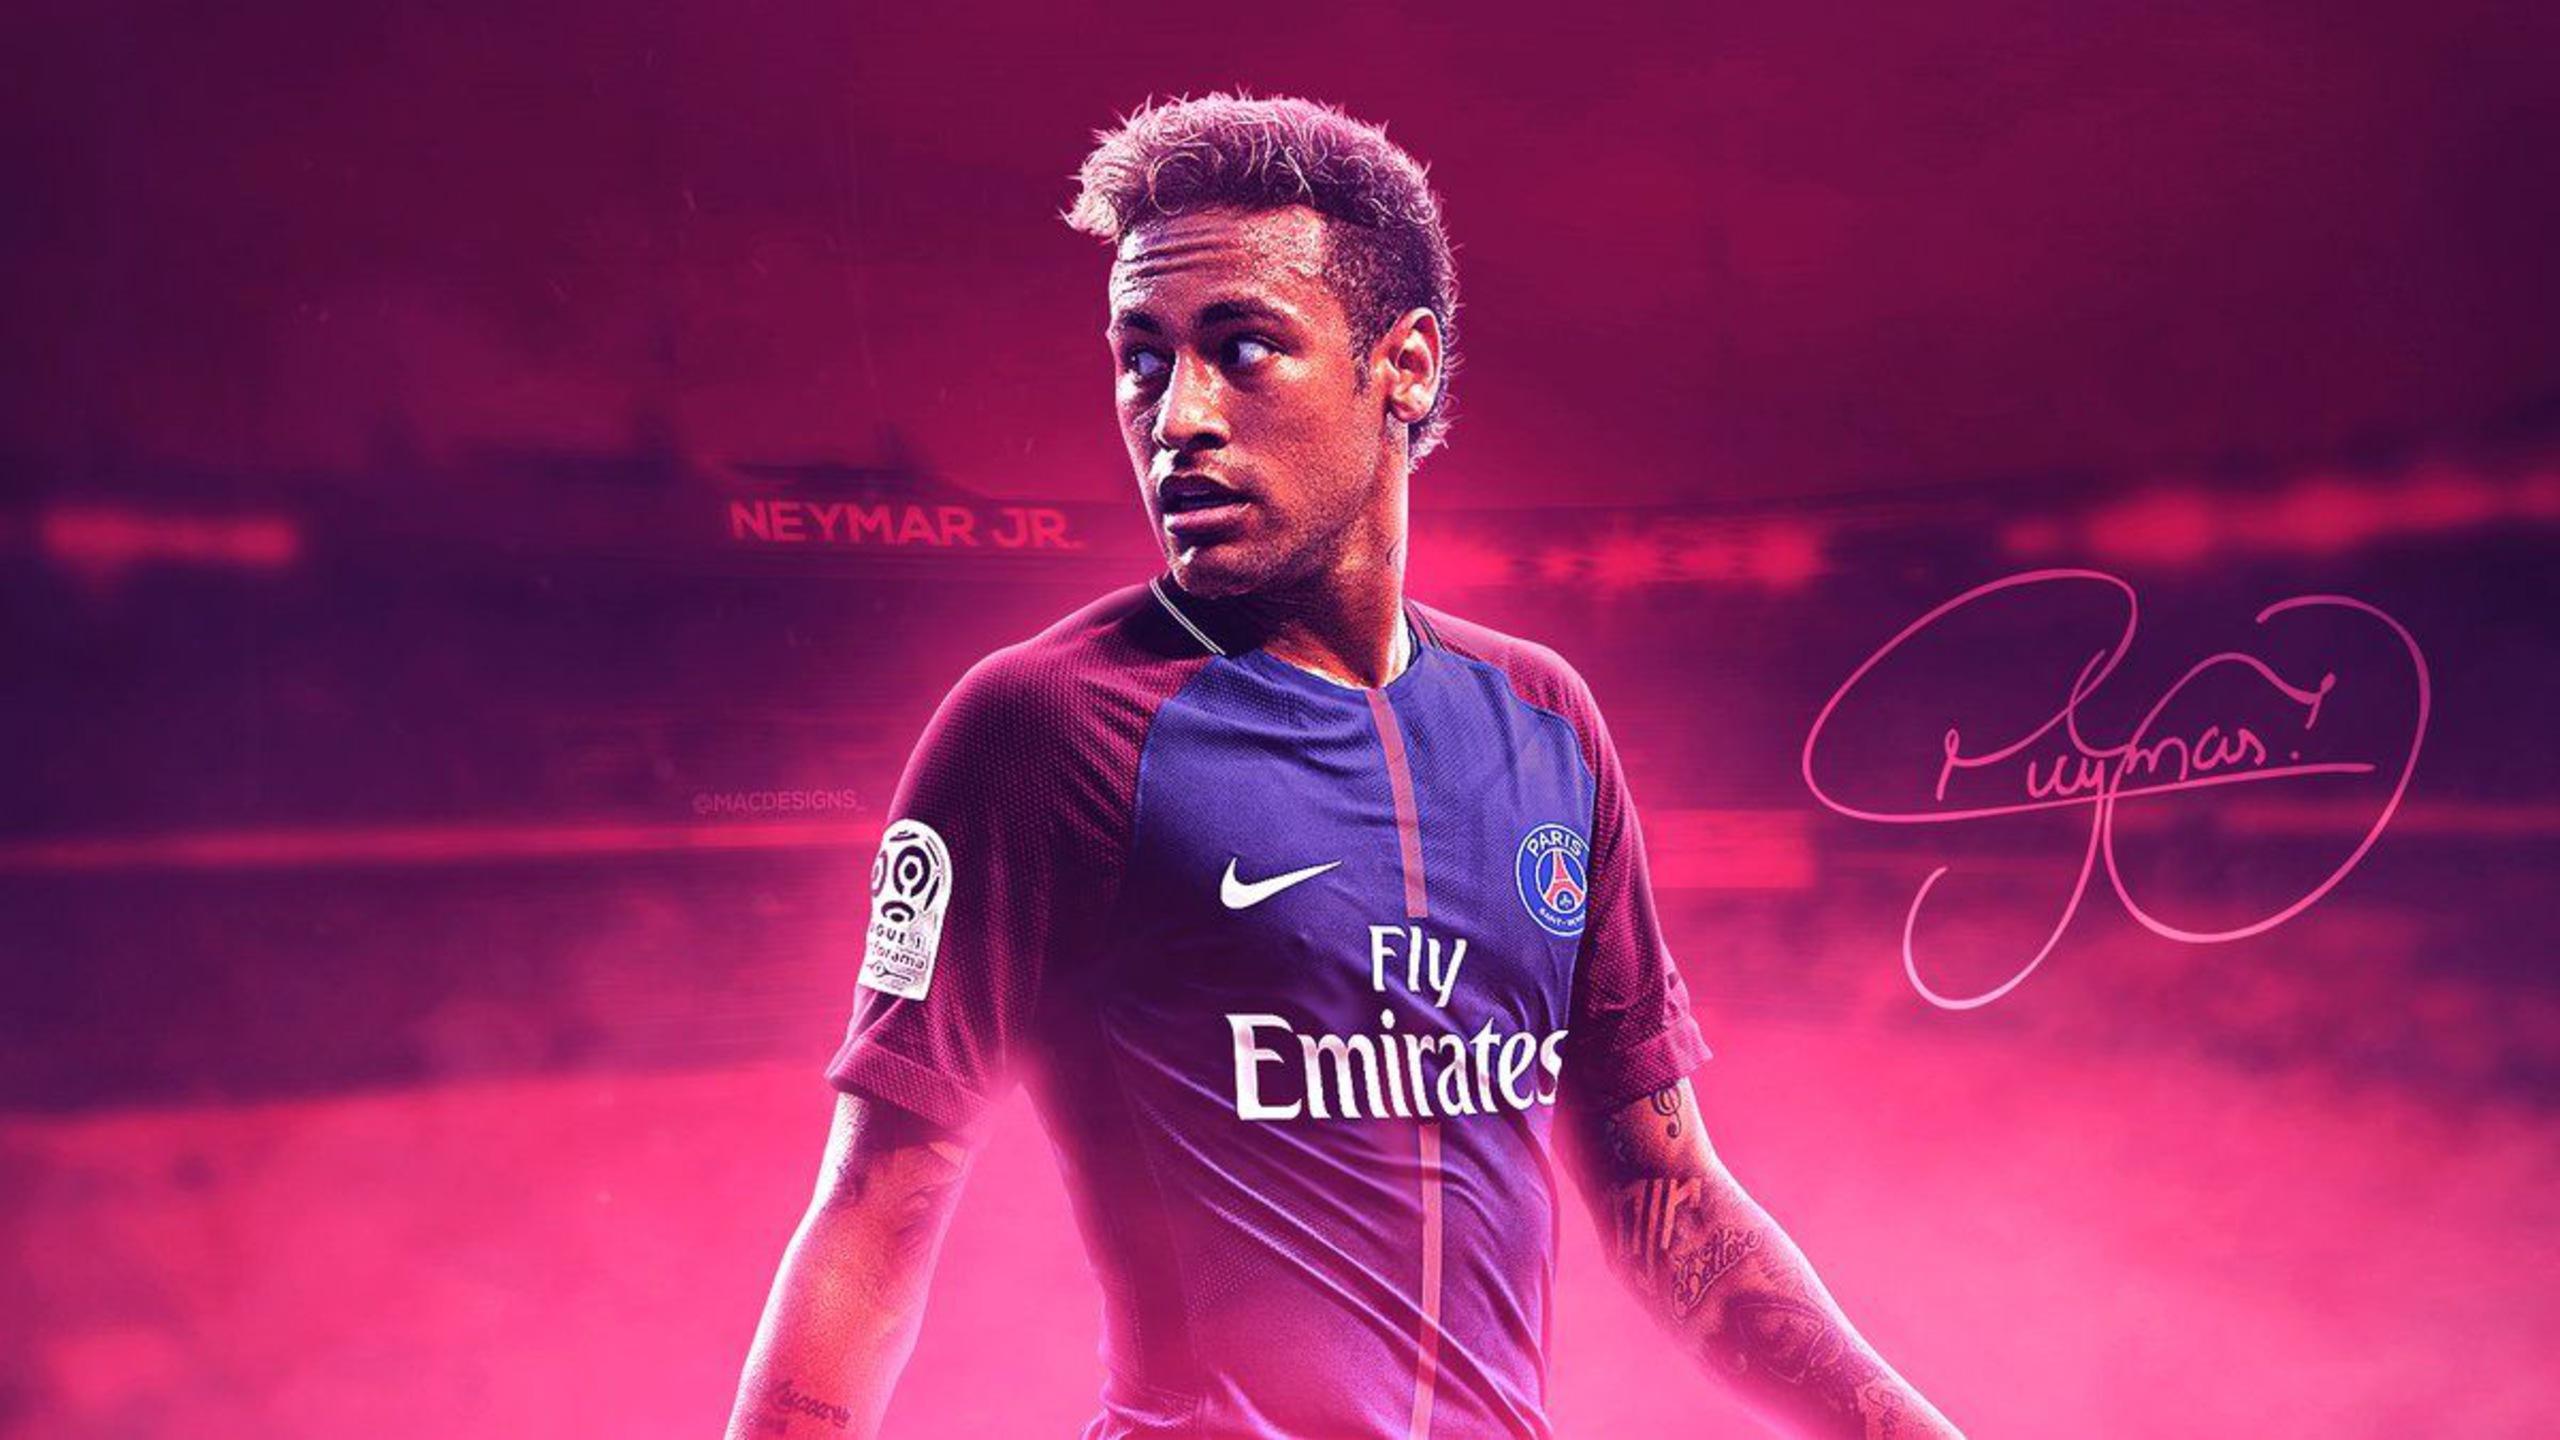 Neymar HD Wallpaper & Photo Download Background Picture